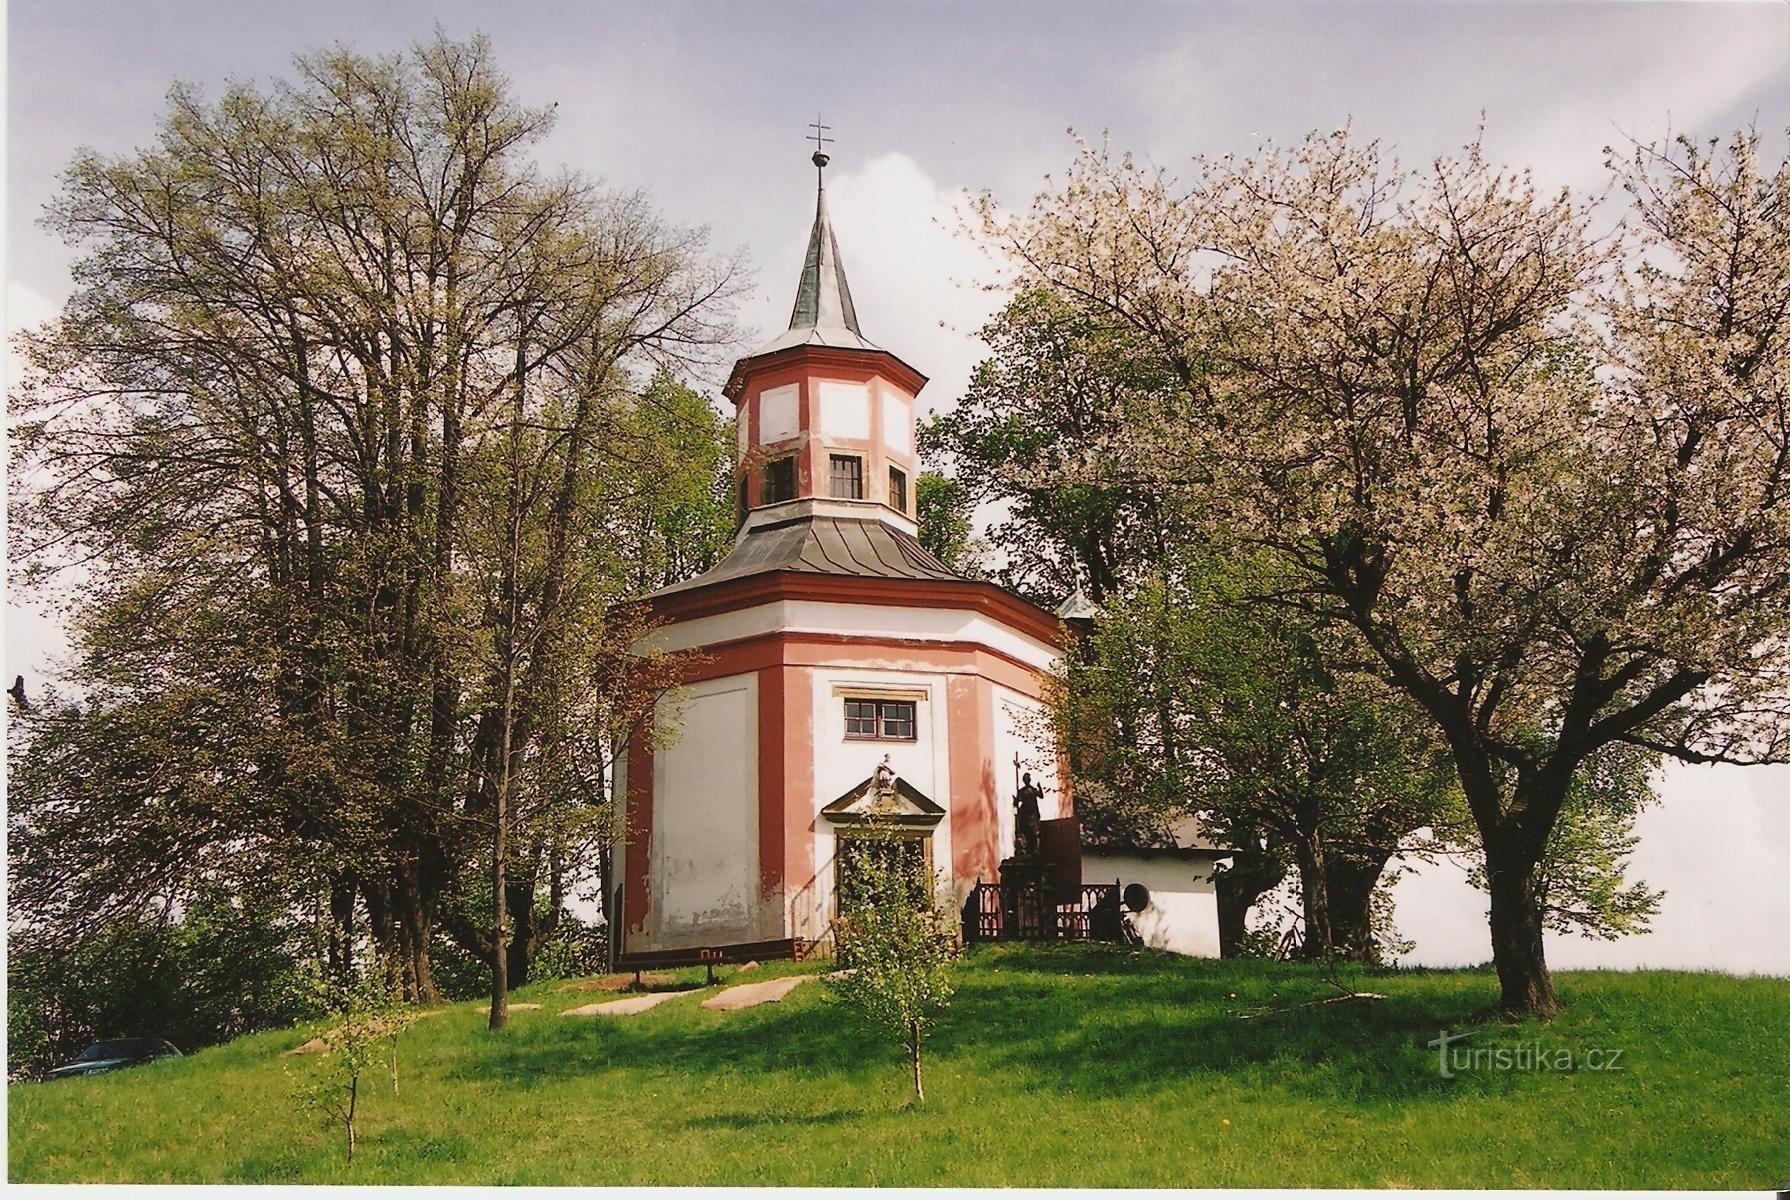 Hartmanice - Chapel of St. Jan Nepomucký